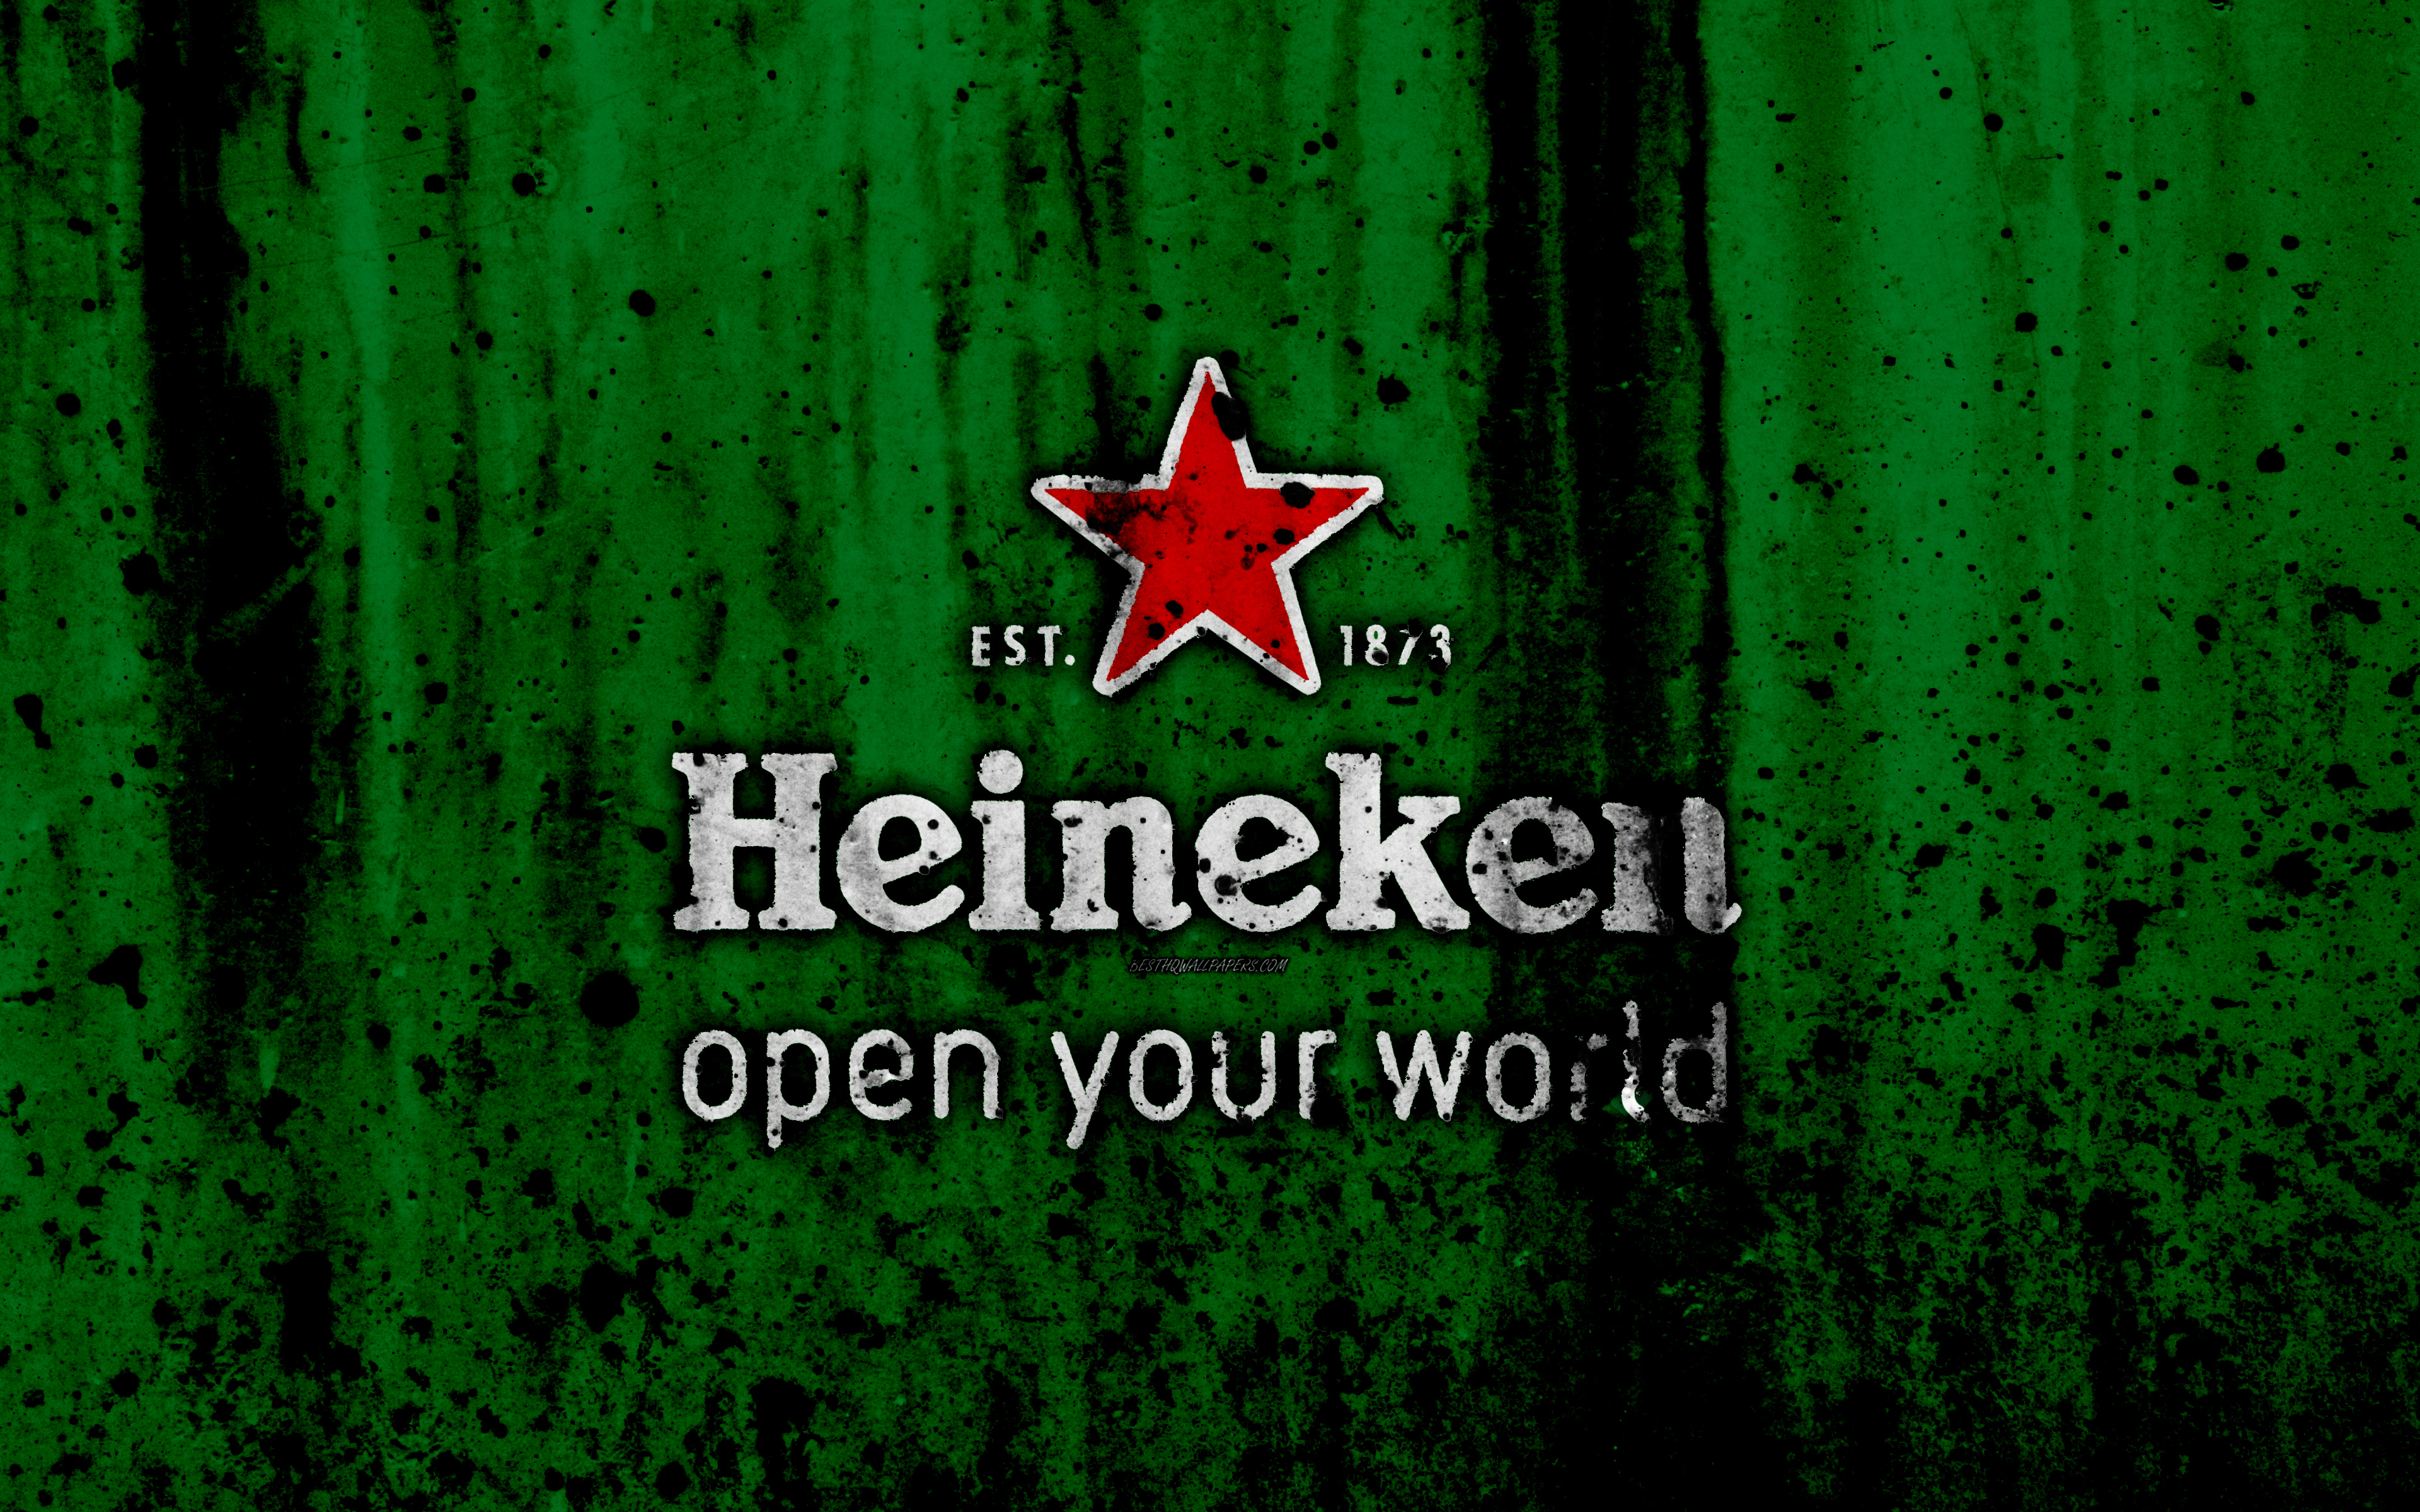 Download wallpaper Heineken, 4k, logo, beer, grunge, green backgroud, Heineken logo for desktop with resolution 3840x2400. High Quality HD picture wallpaper